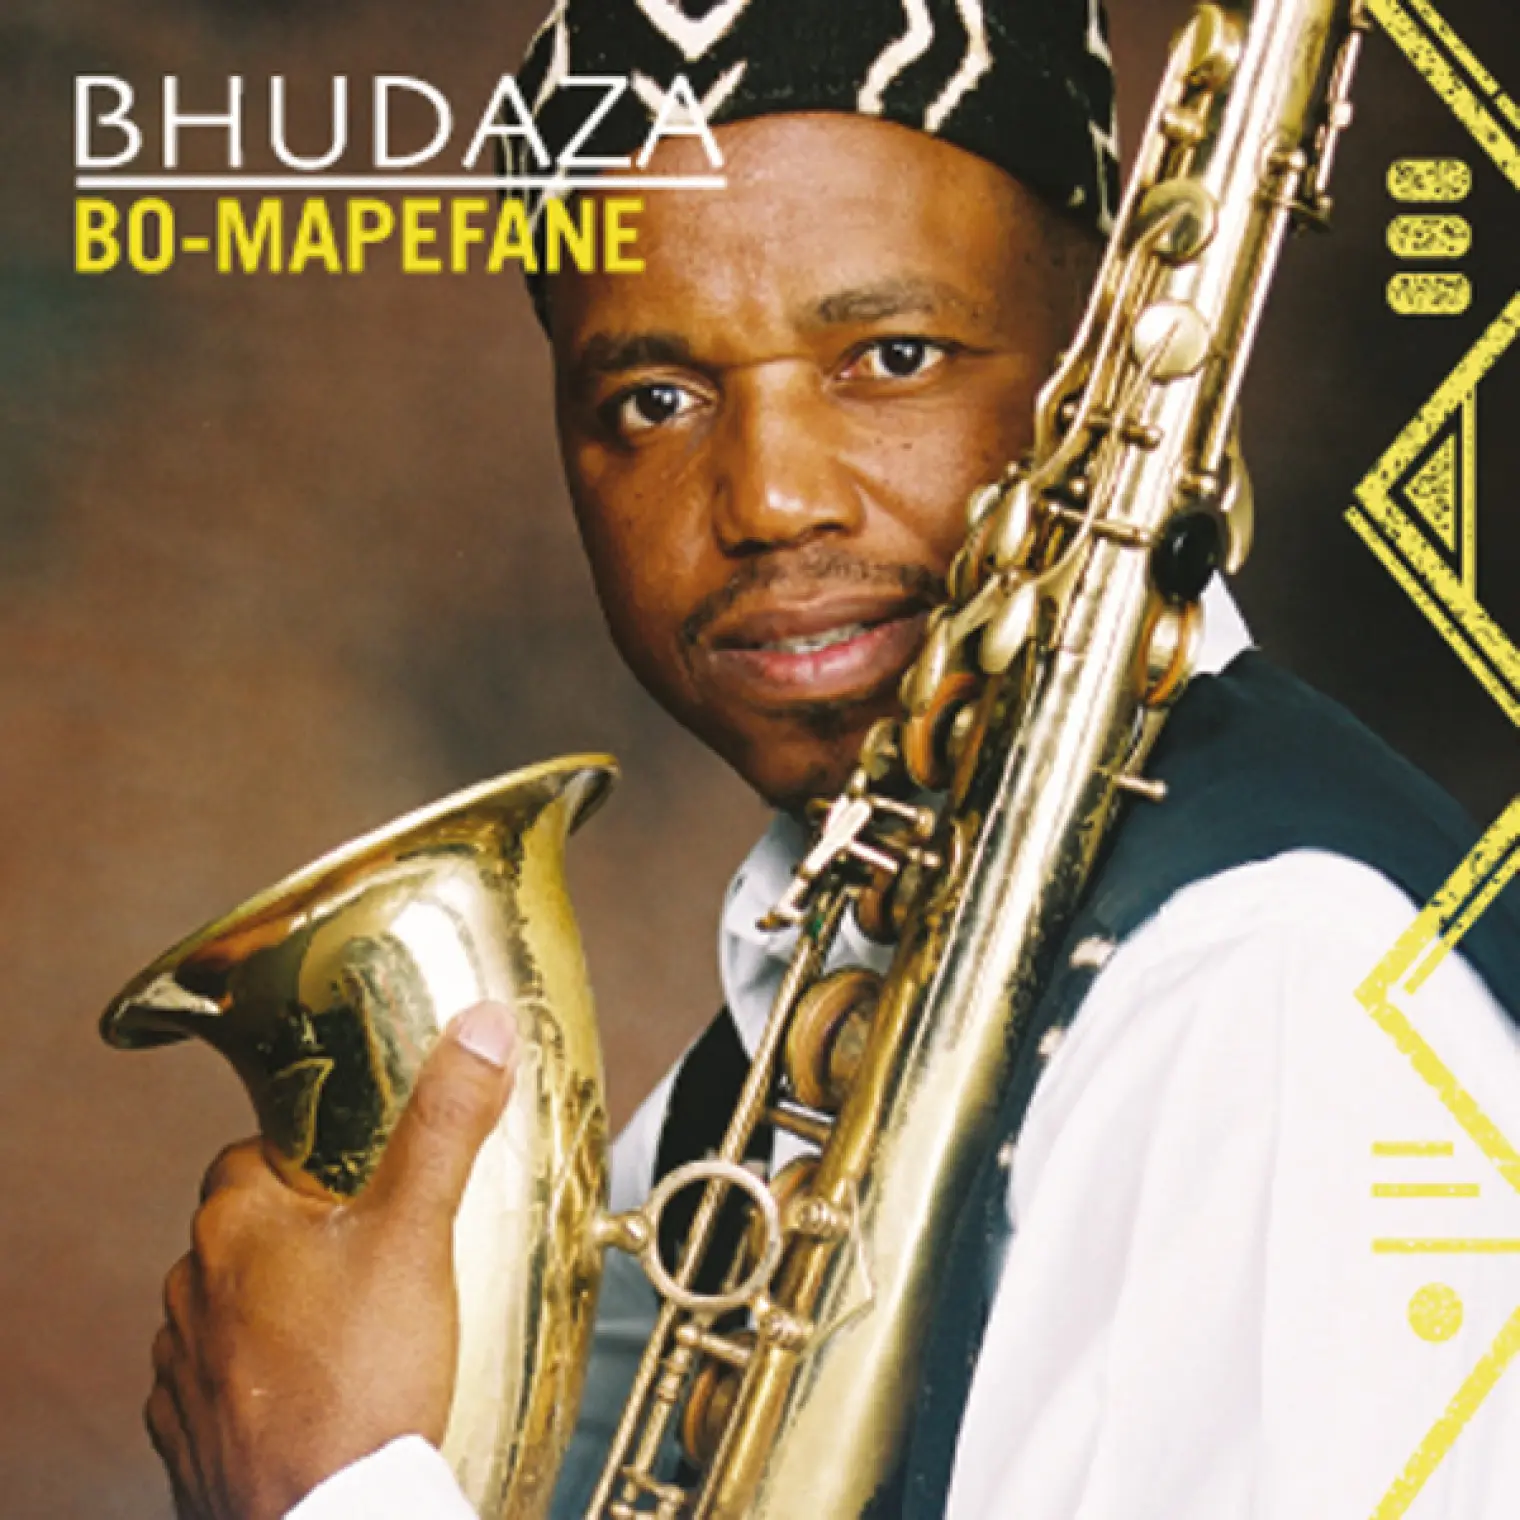 Bo-Mapefane -  Bhudaza 